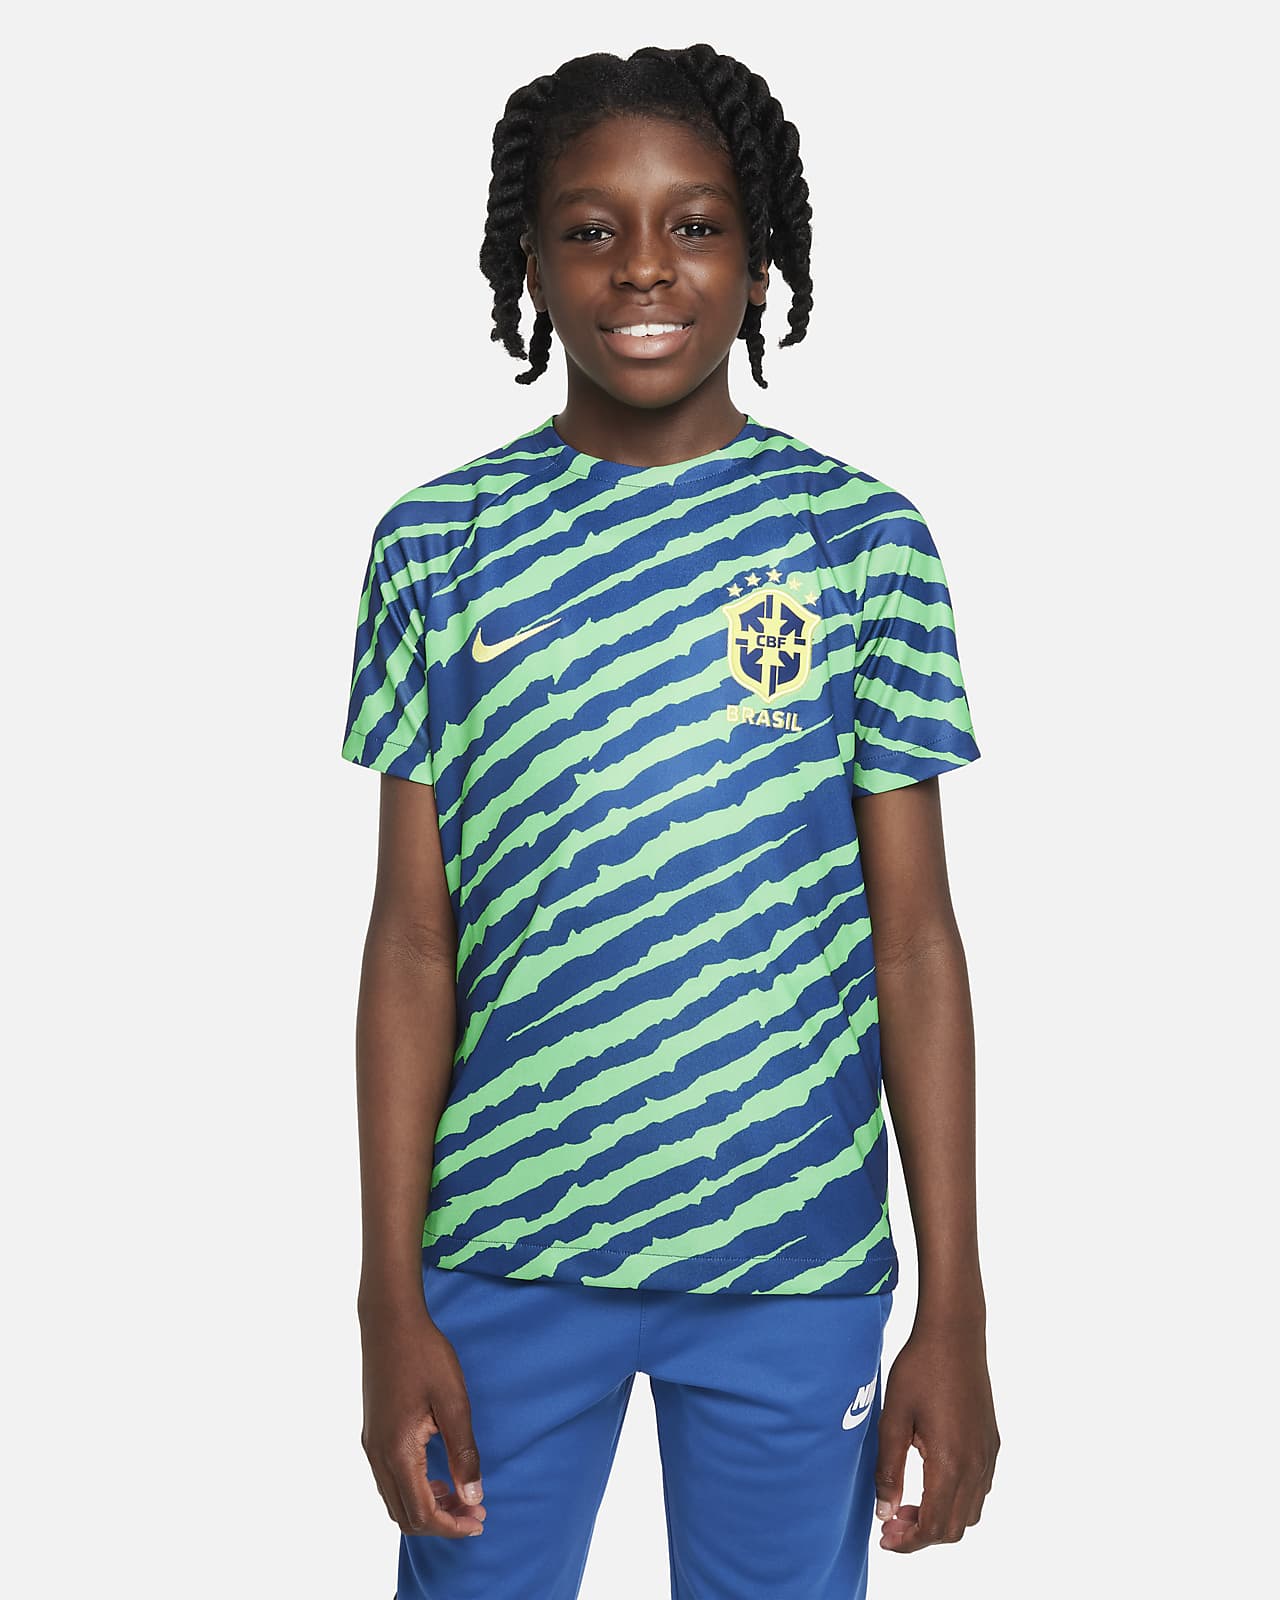 Brazil Big Kids' Nike Dri-FIT Pre-Match Soccer Top.